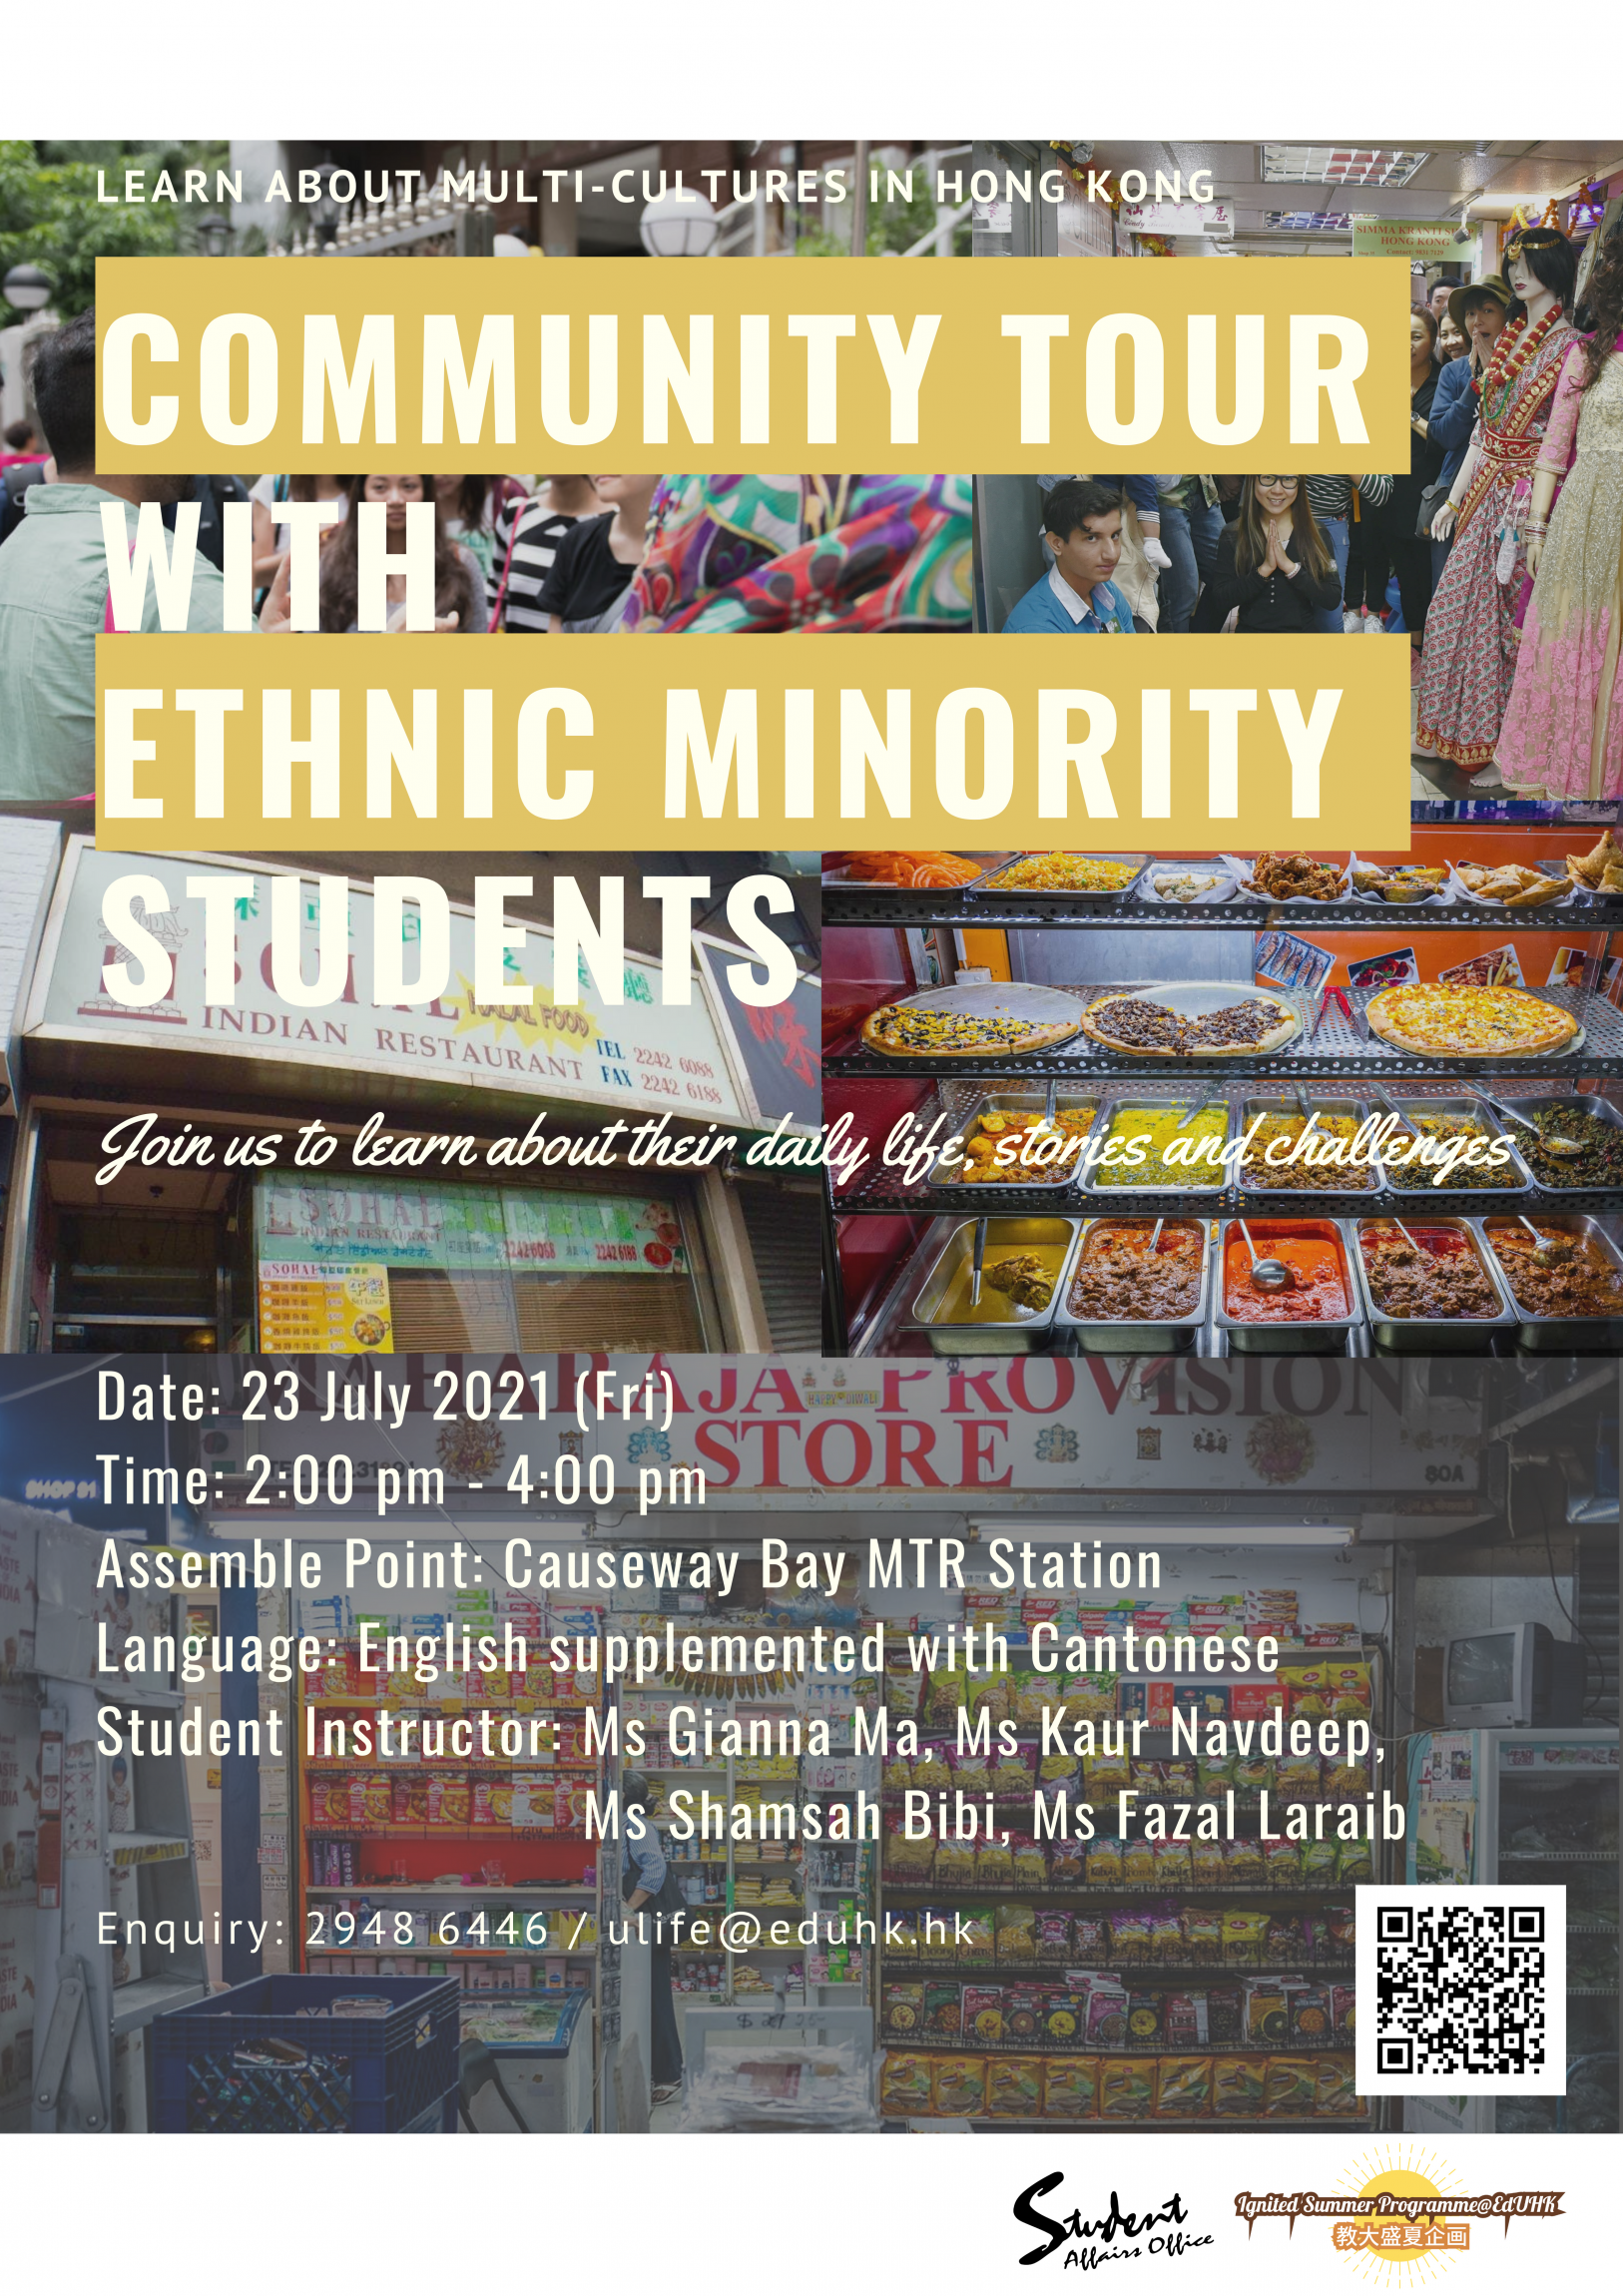 Public Photos / Files - Community Tour with Ethnic Minority Students